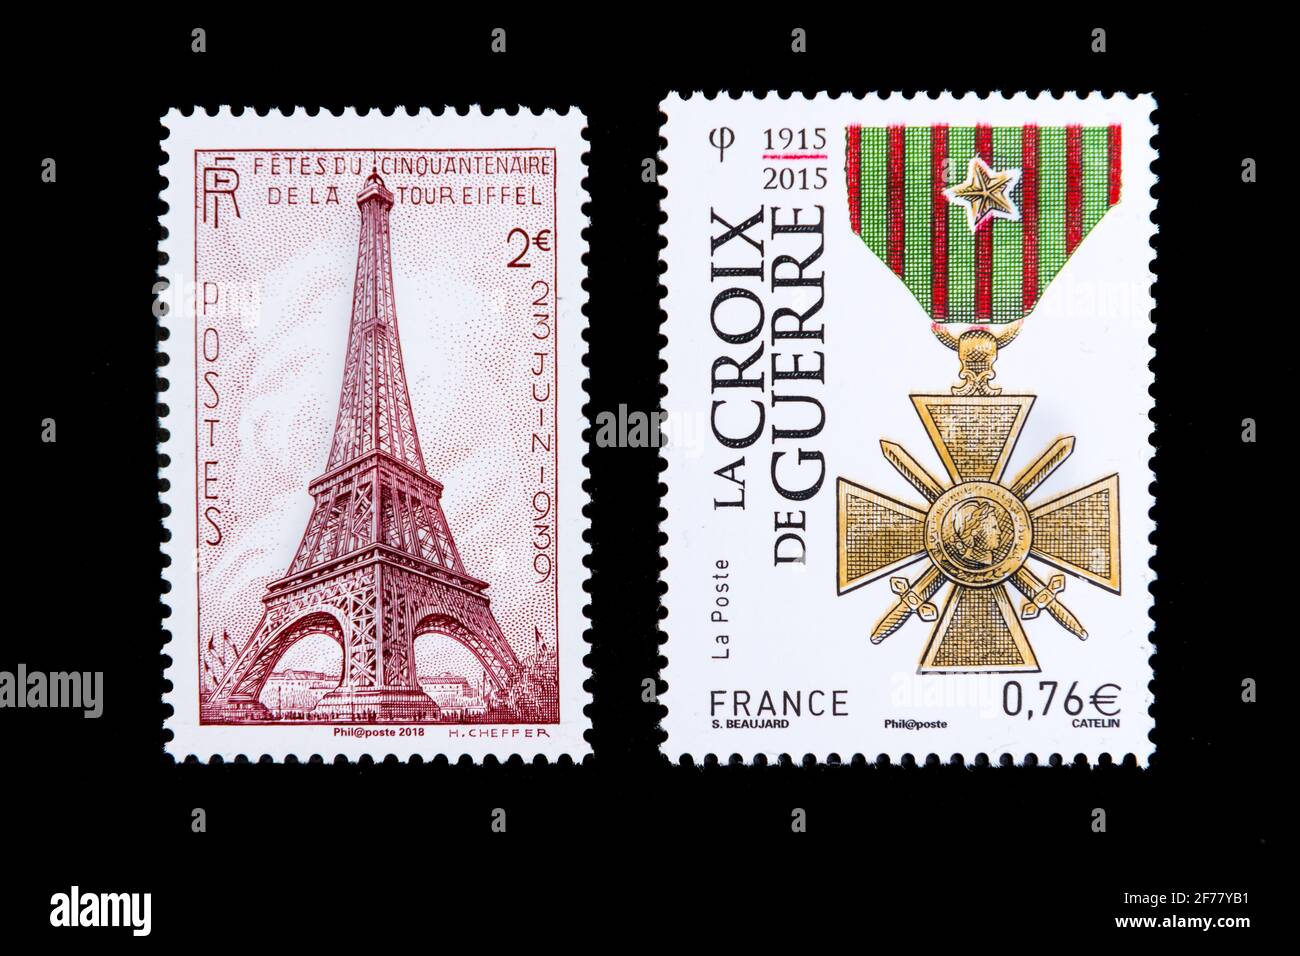 France, Paris, stamps Stock Photo